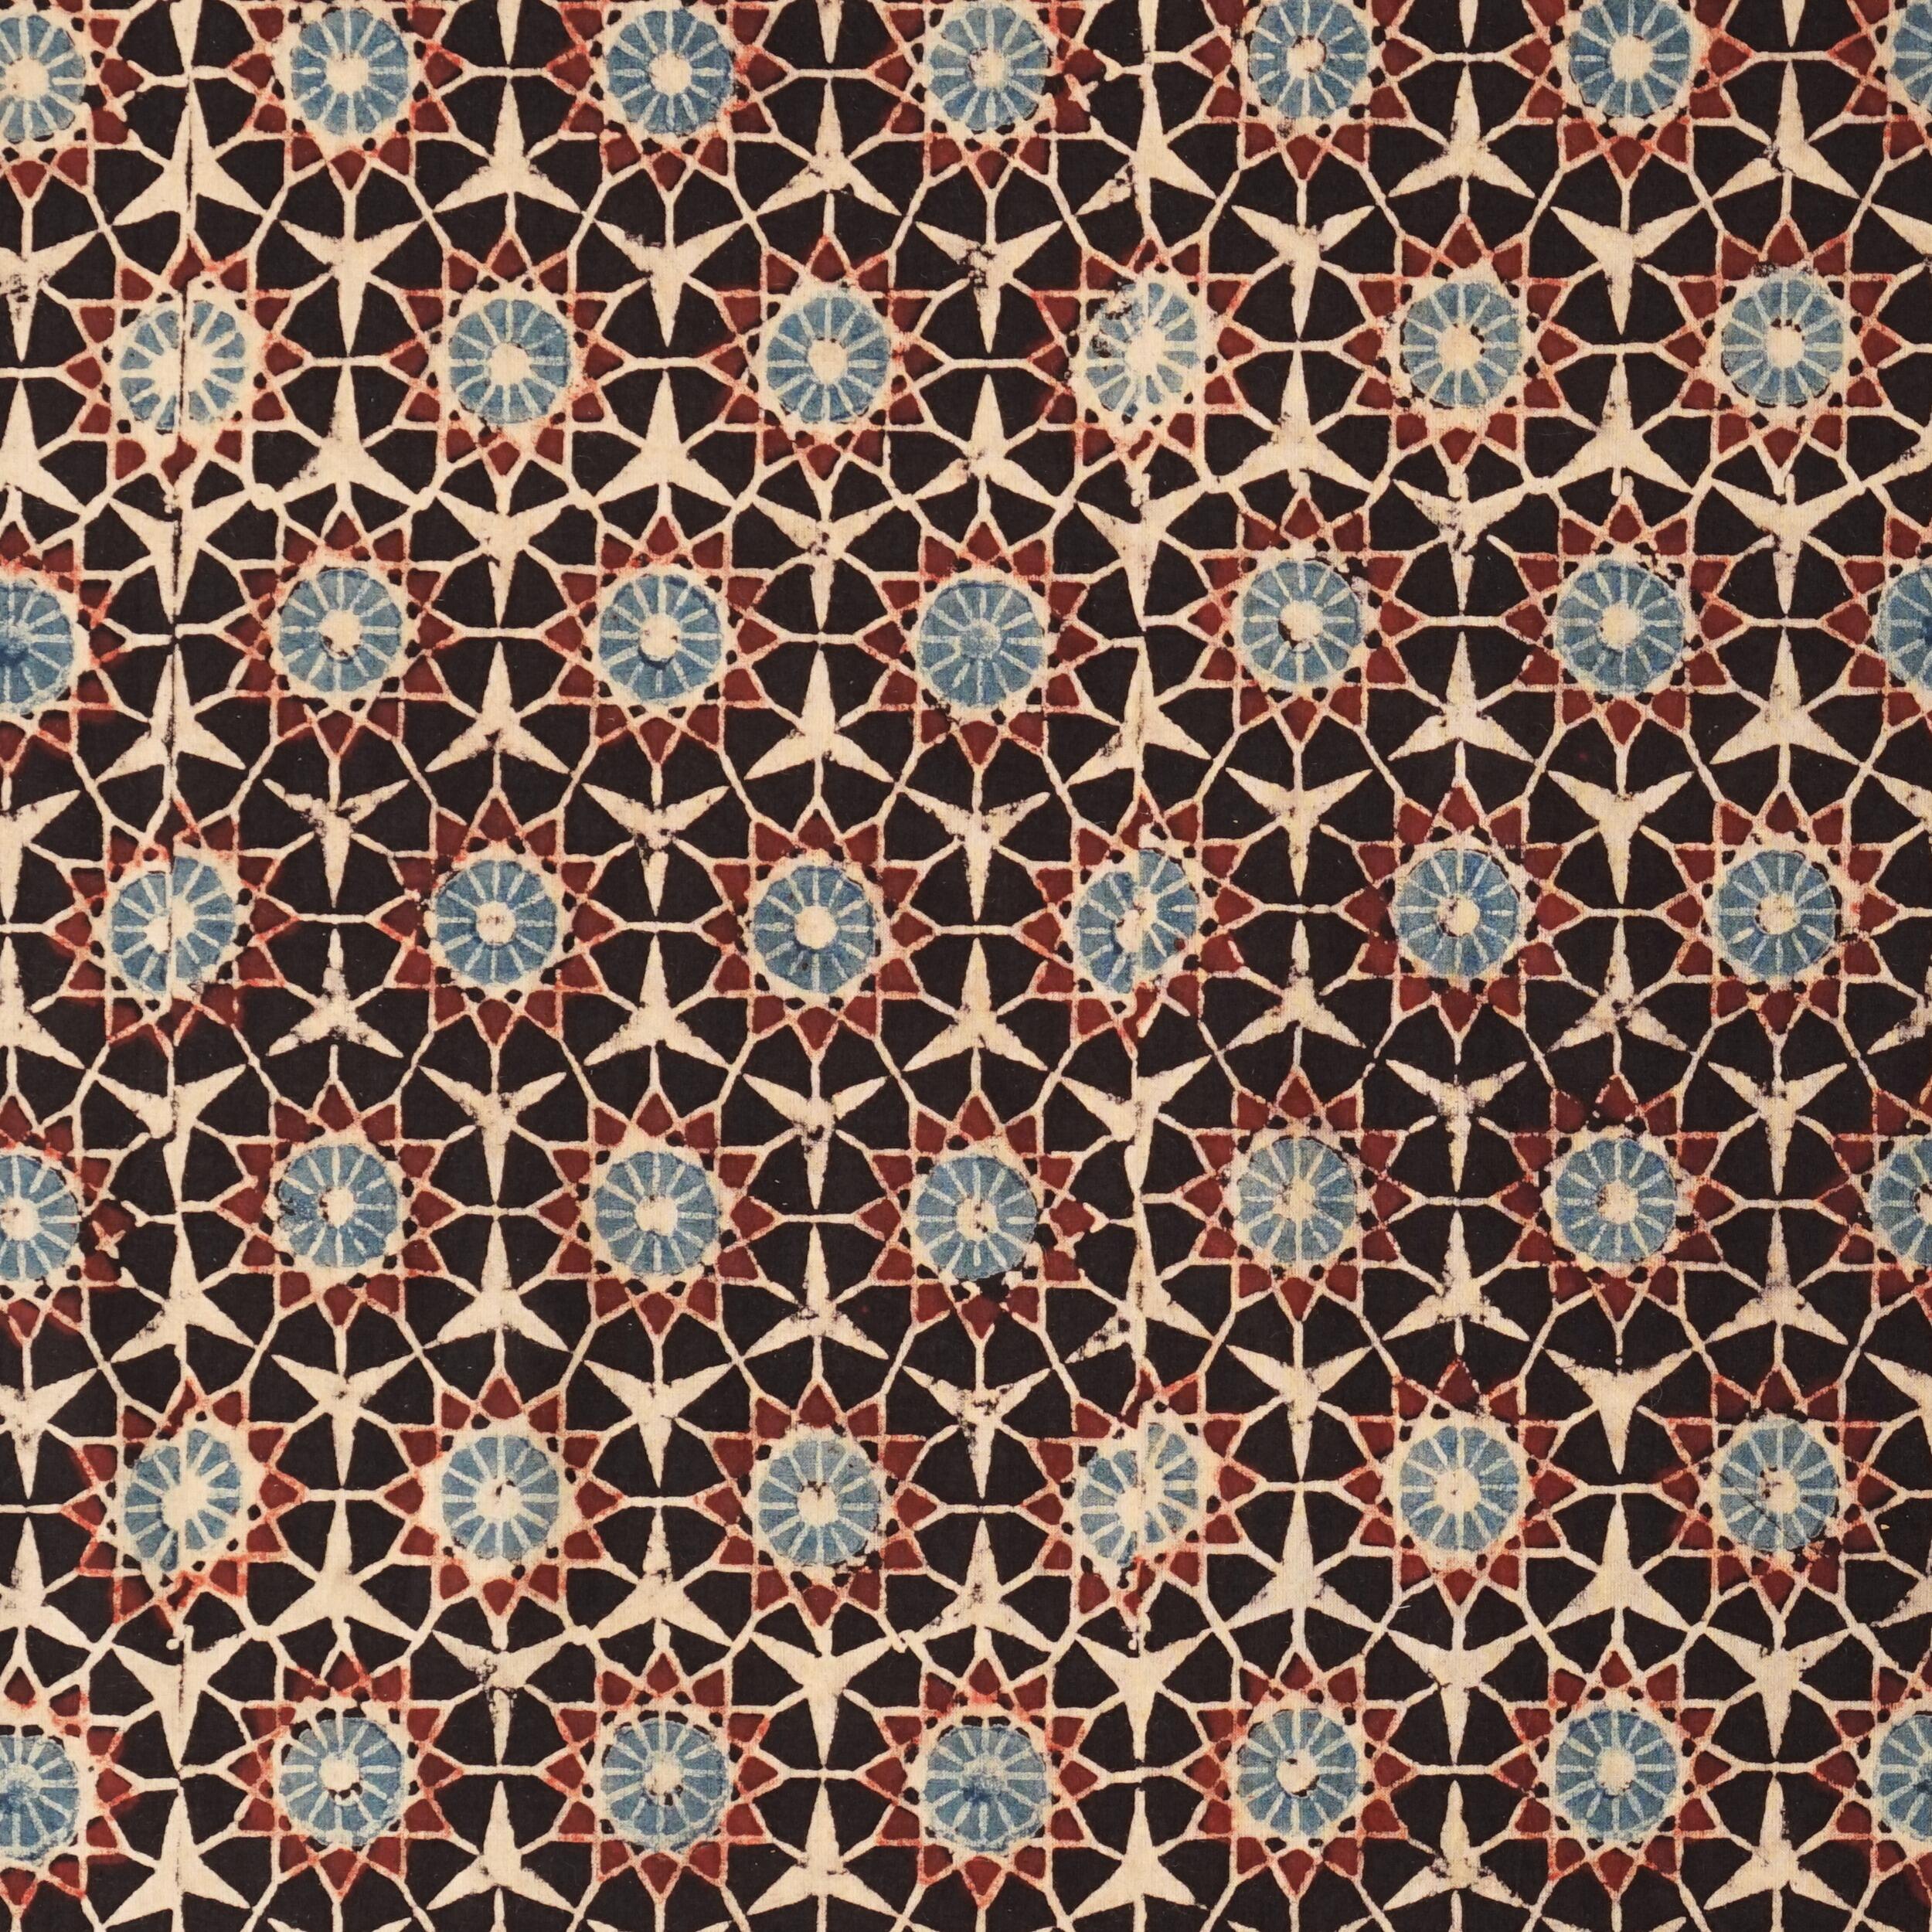 Block Printed Fabric, 100% Cotton, Ajrak Design: Black Base, Madder Root Red, Blue, Cream Burst. Flat